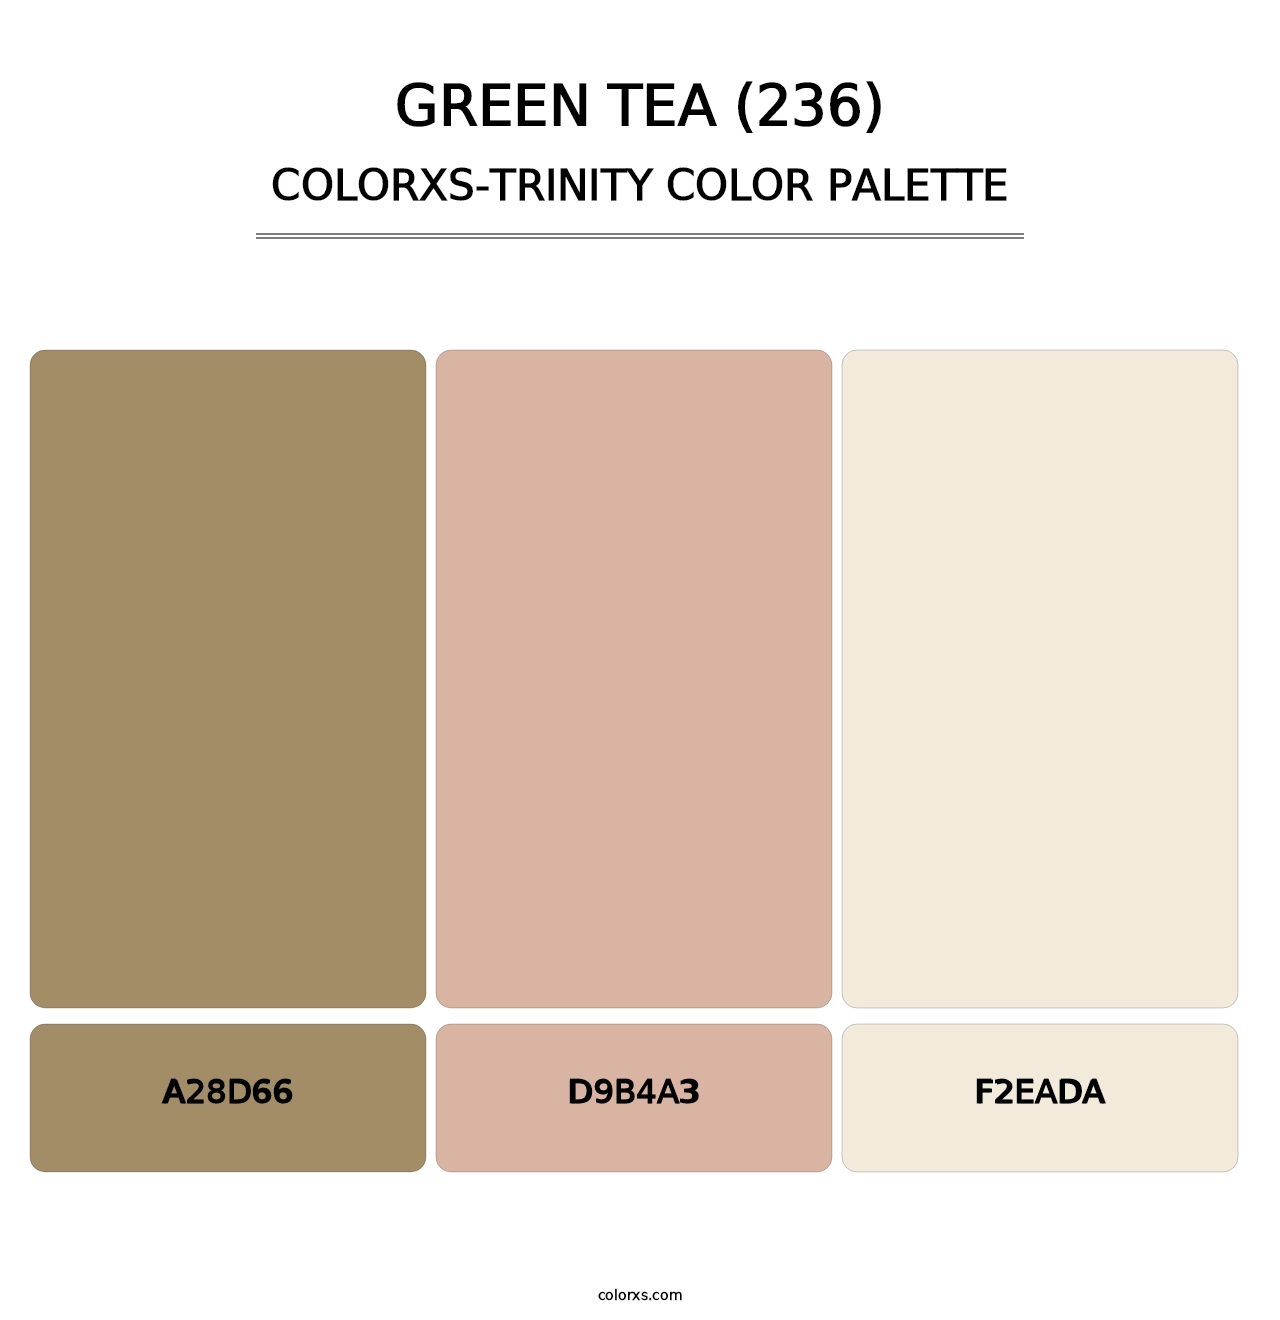 Green Tea (236) - Colorxs Trinity Palette